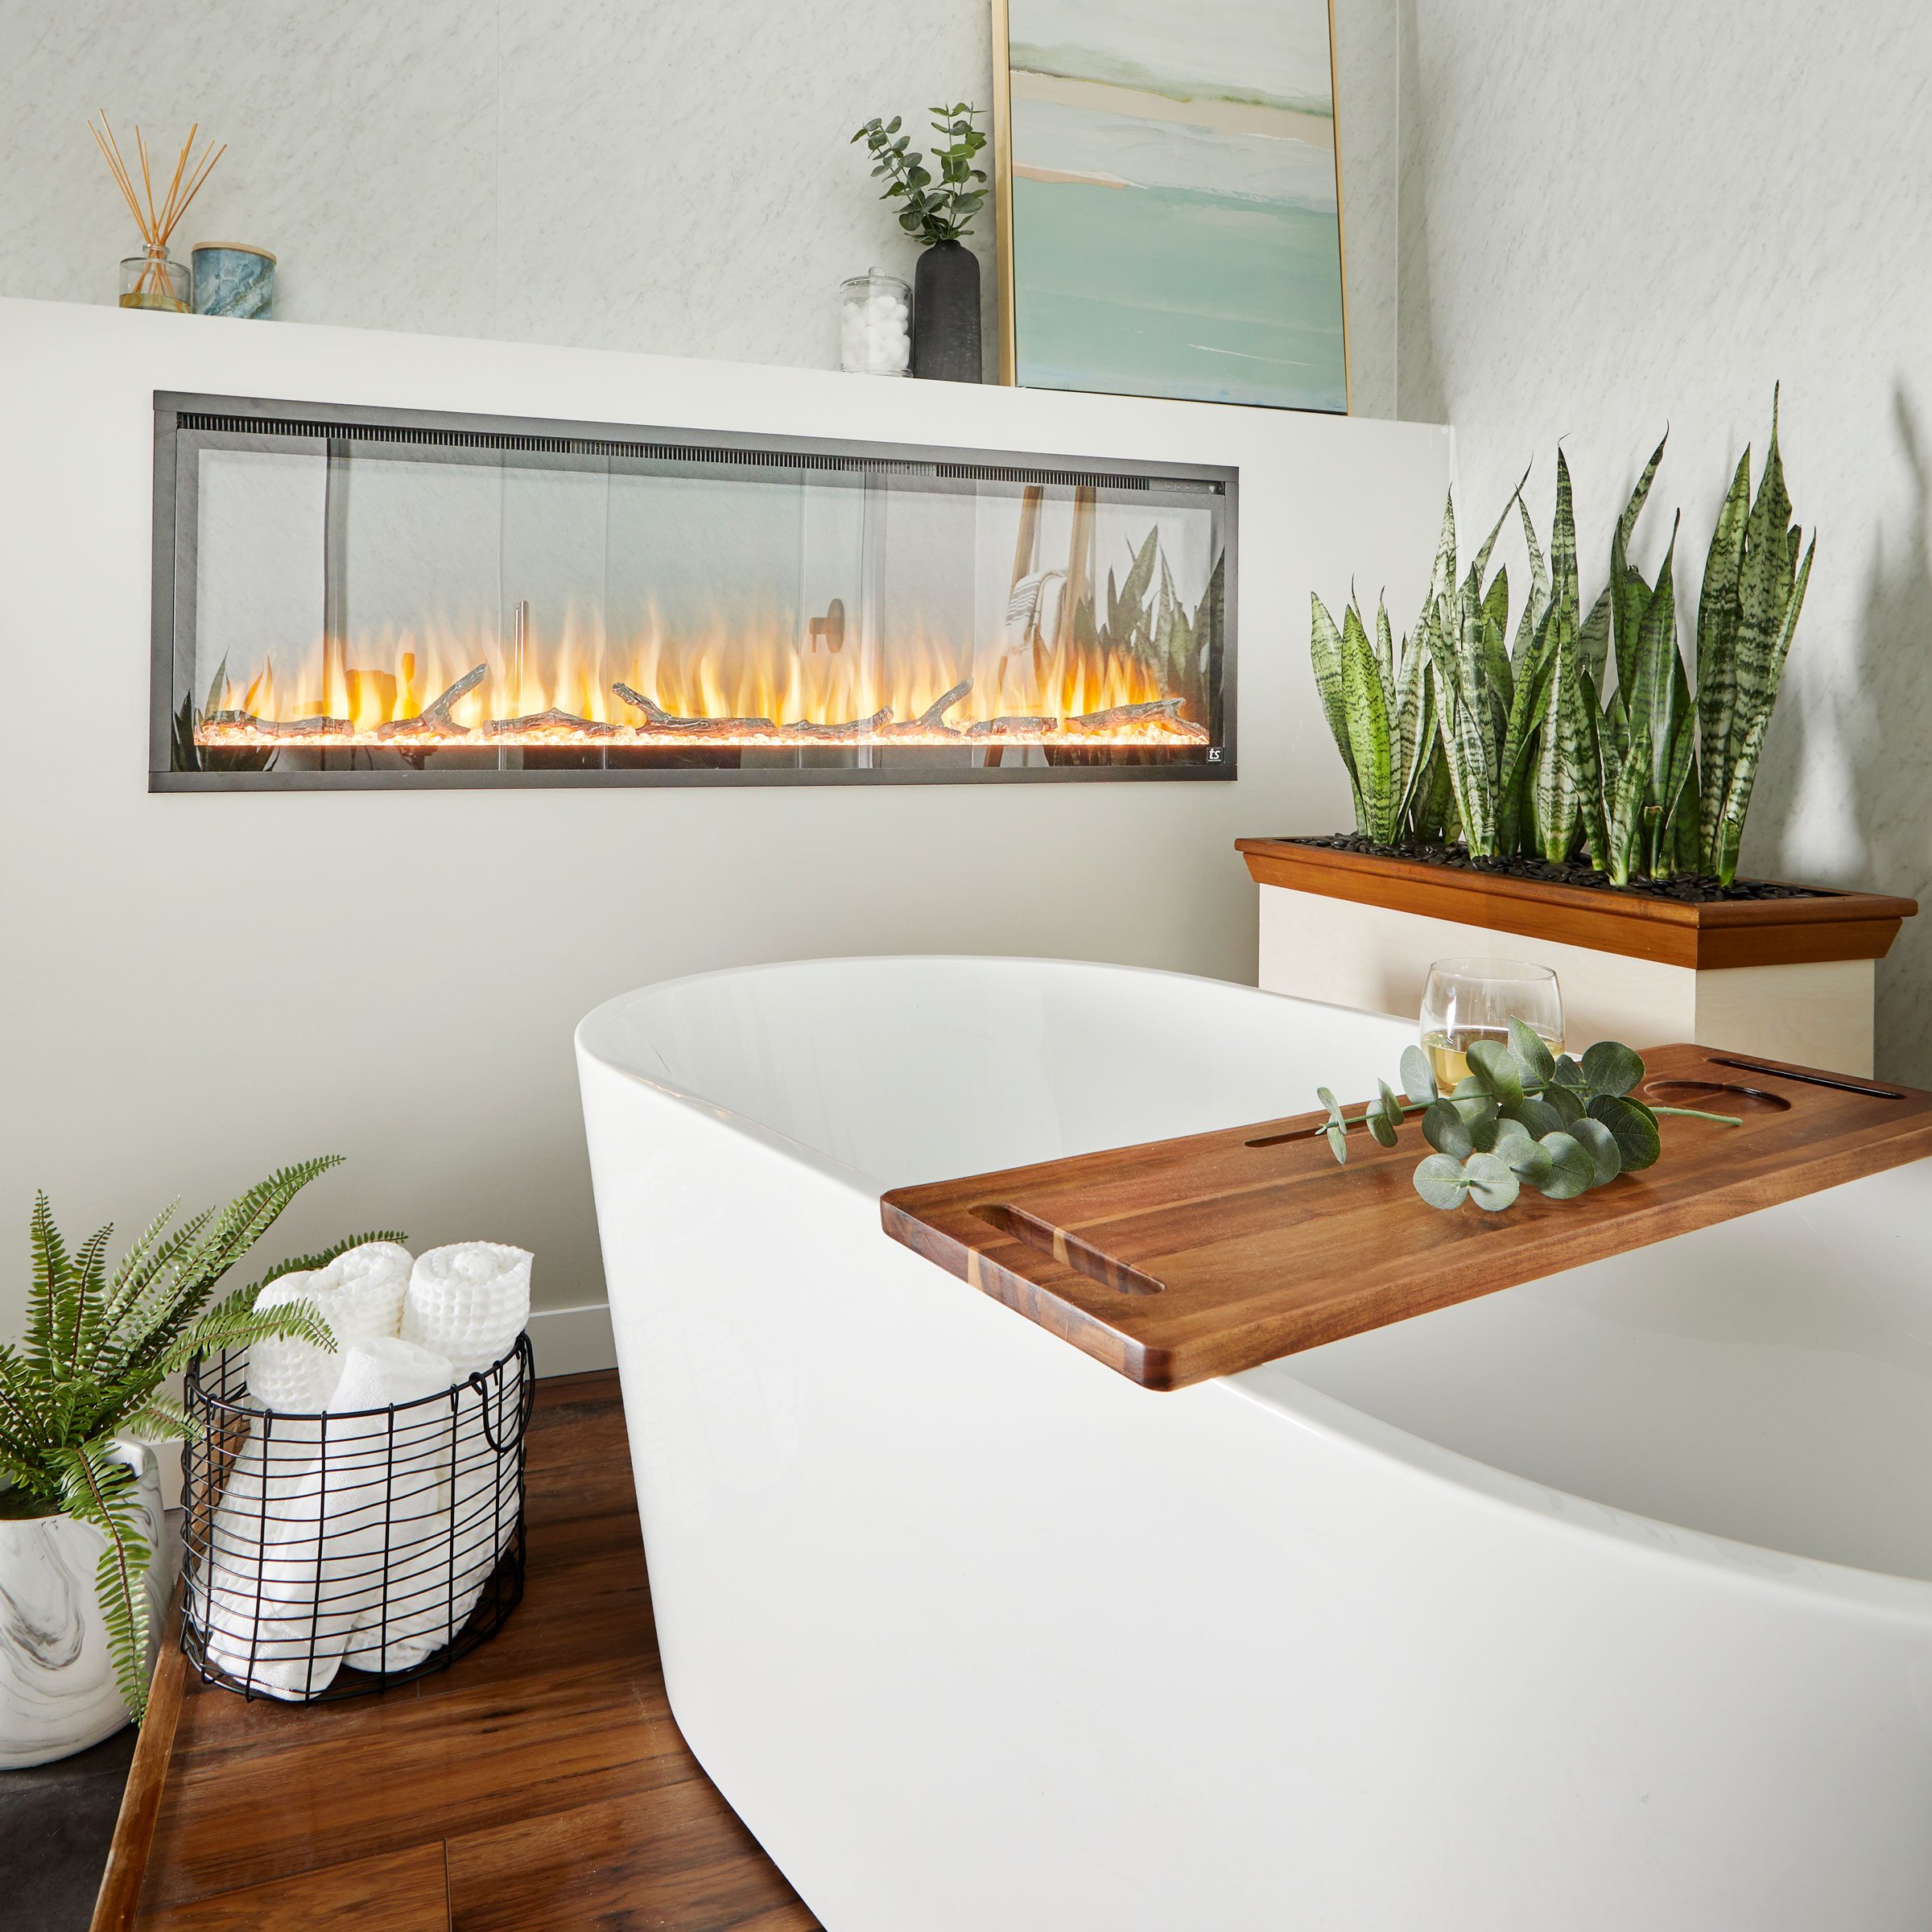 spa bathtub at home